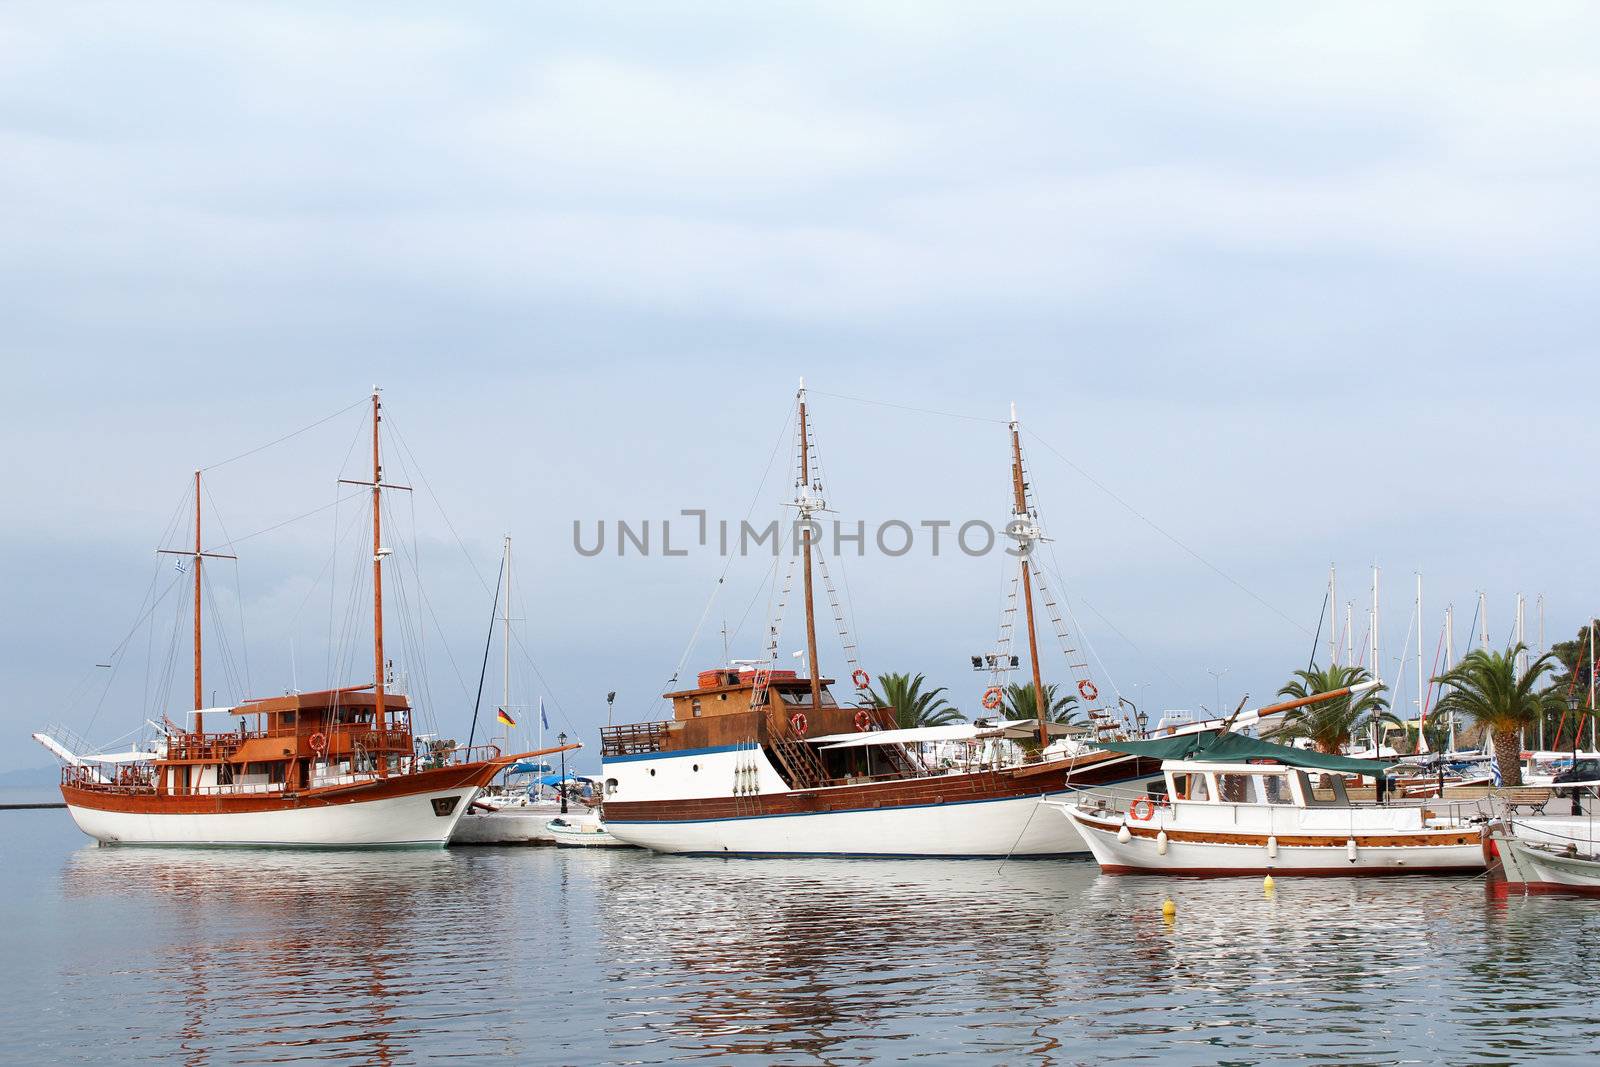 Neos Marmaras port with sailboat